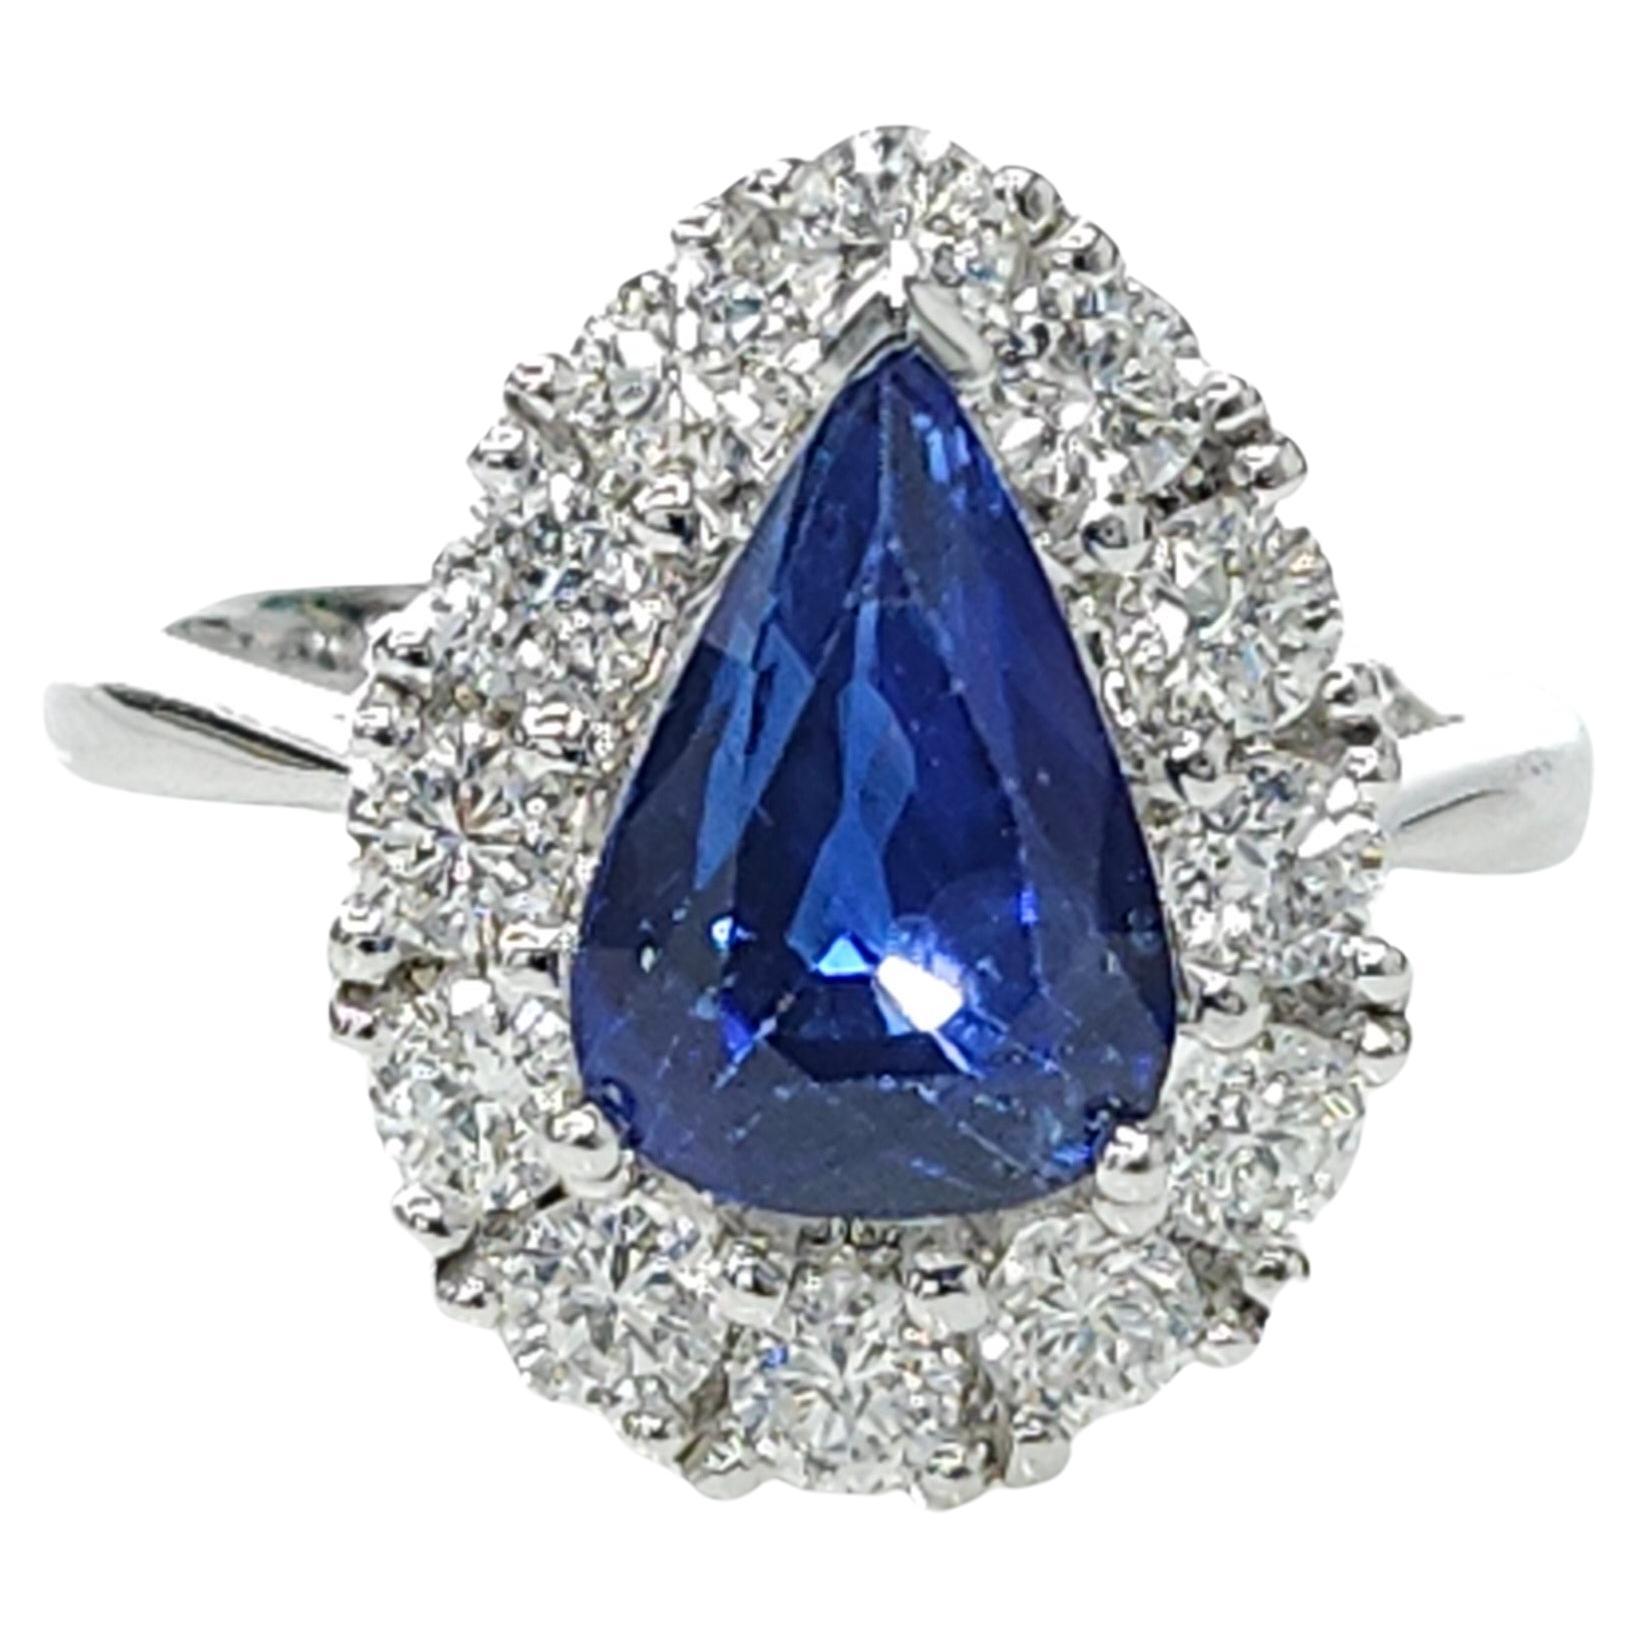 IGI Certified 3.08 Carat Blue Sapphire & Diamond Ring in 18K White Gold For Sale